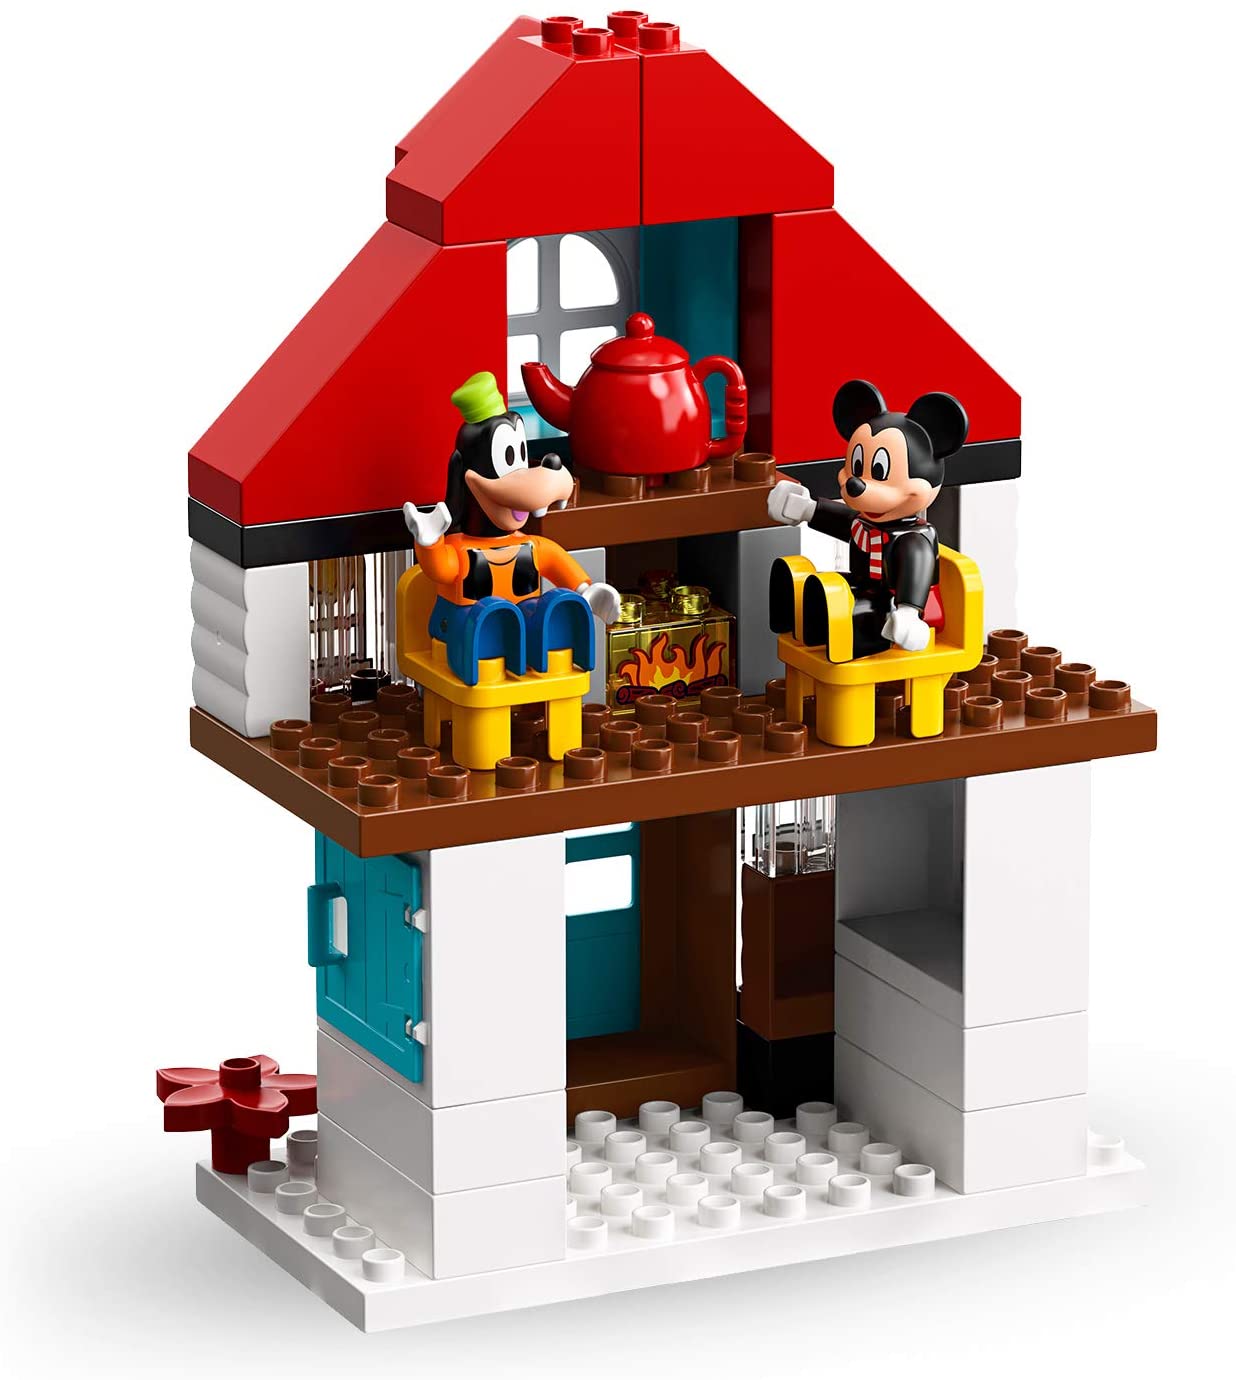 LEGO 10889 DUPLO Disney Mickeyâs Vacation House Toy, Building Set for Toddlers 2 Years Old with 